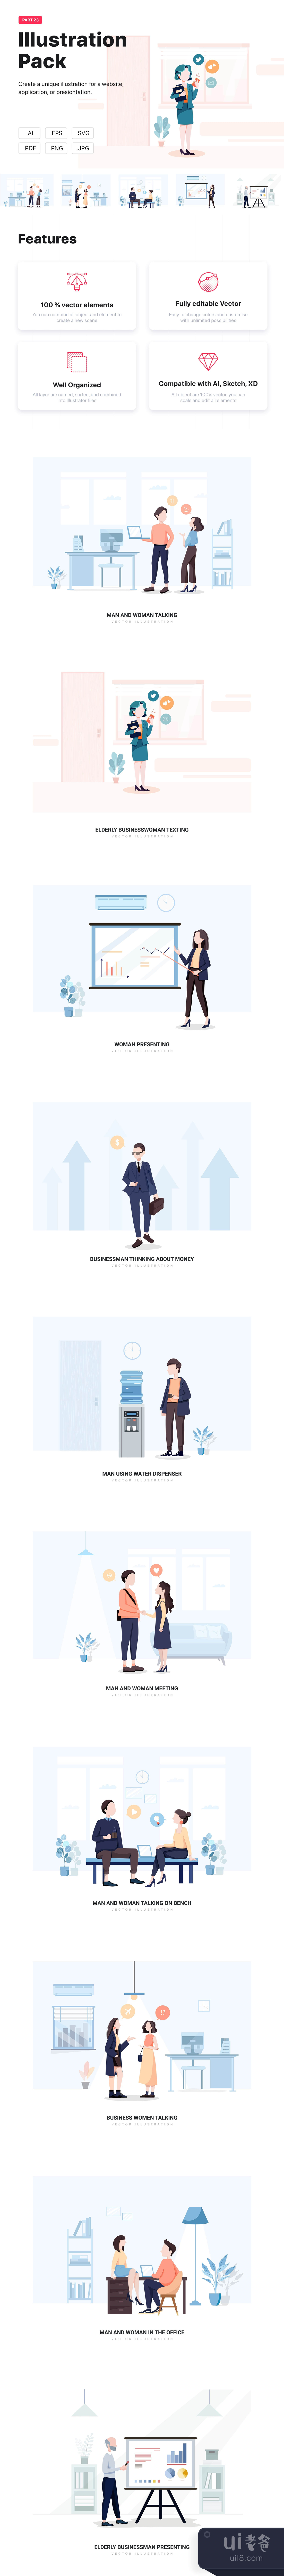 天秤座 - 商业插图包 (Libra - Business Illustration Pack)插图1